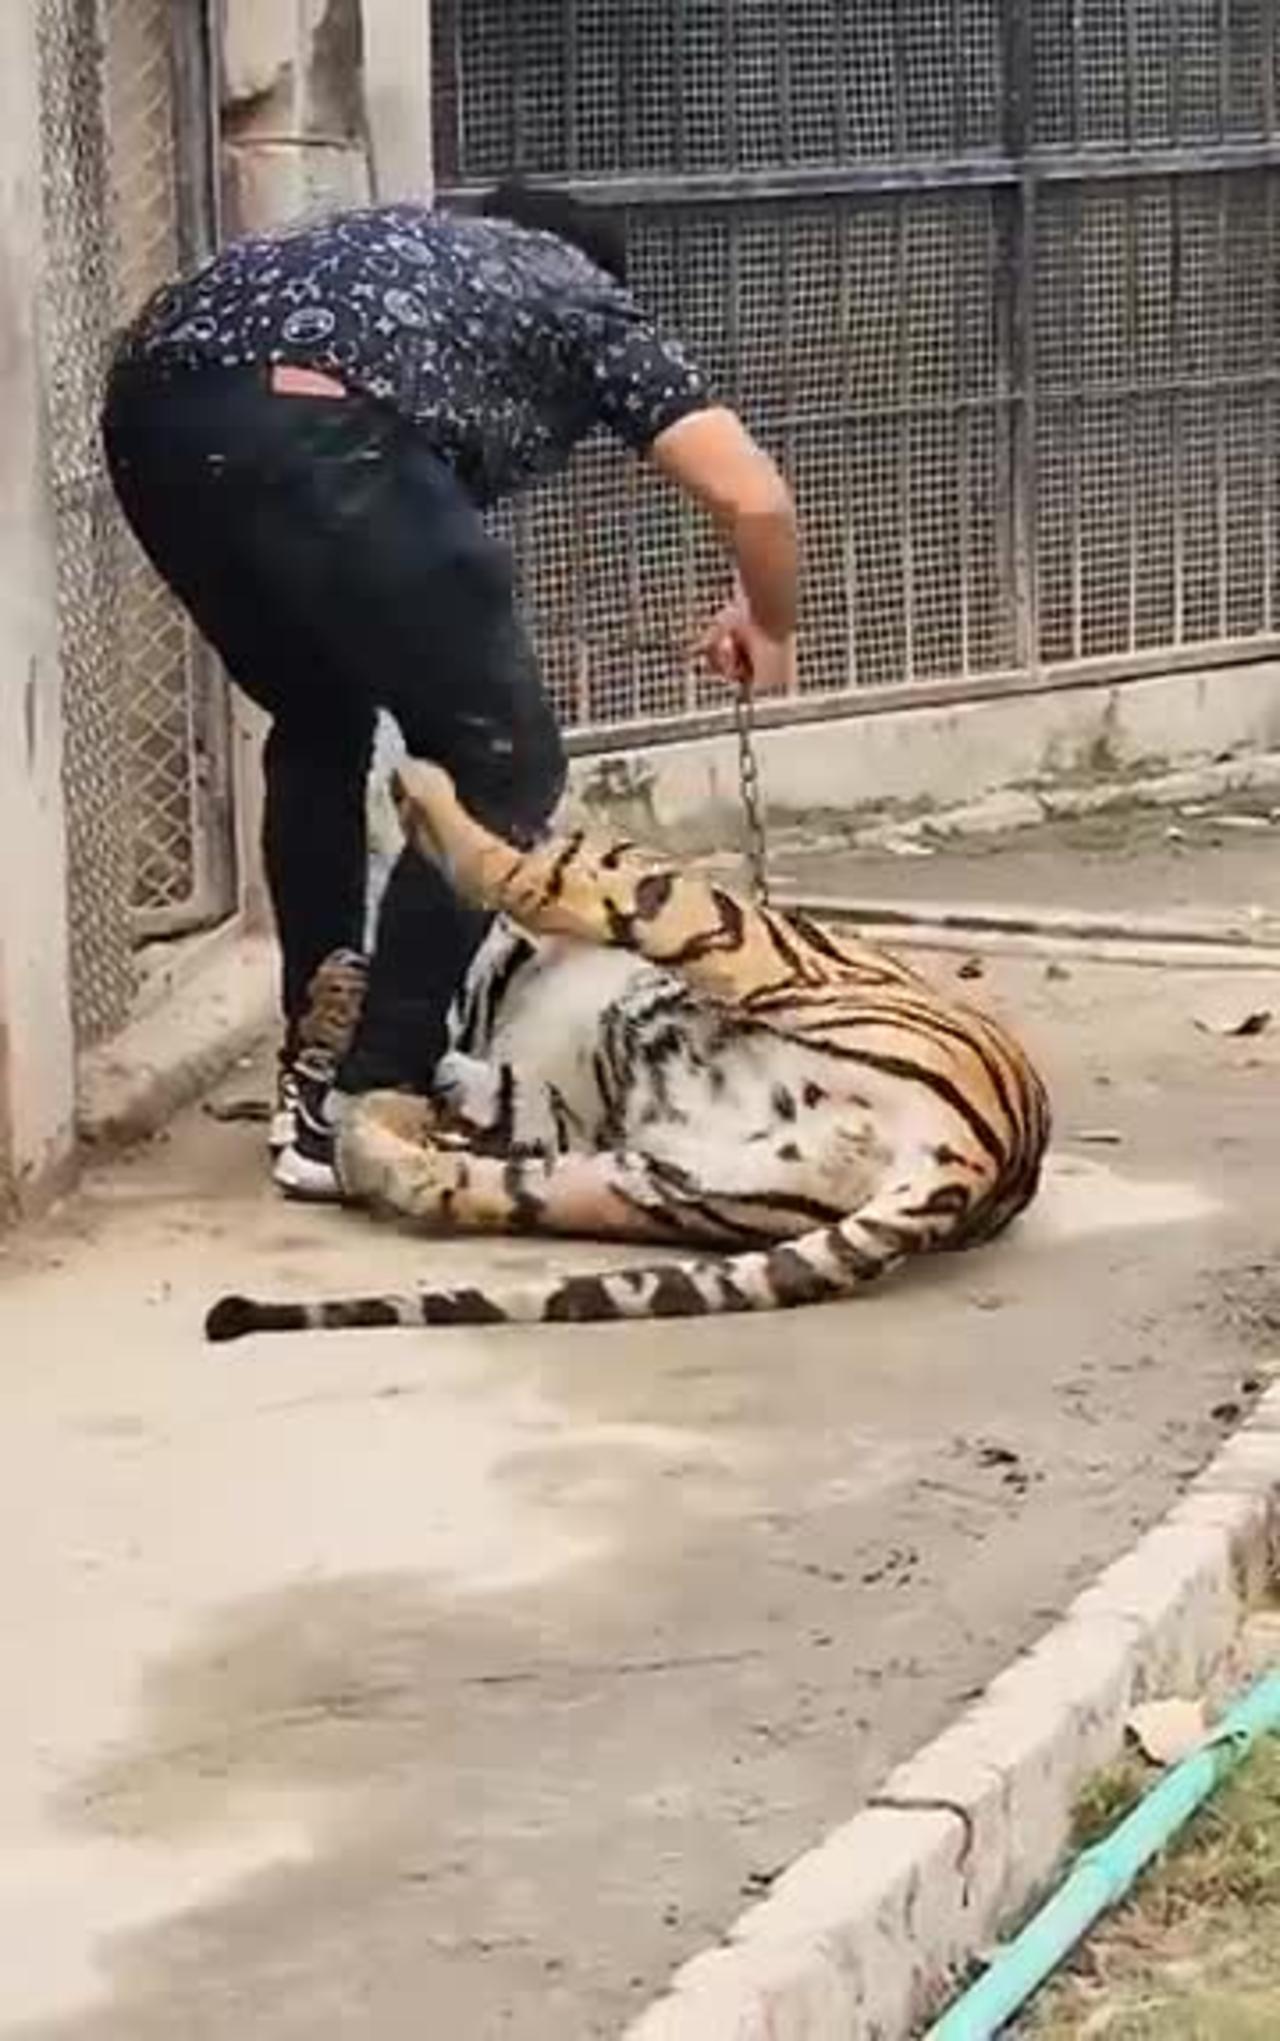 Bengal Tiger Attack